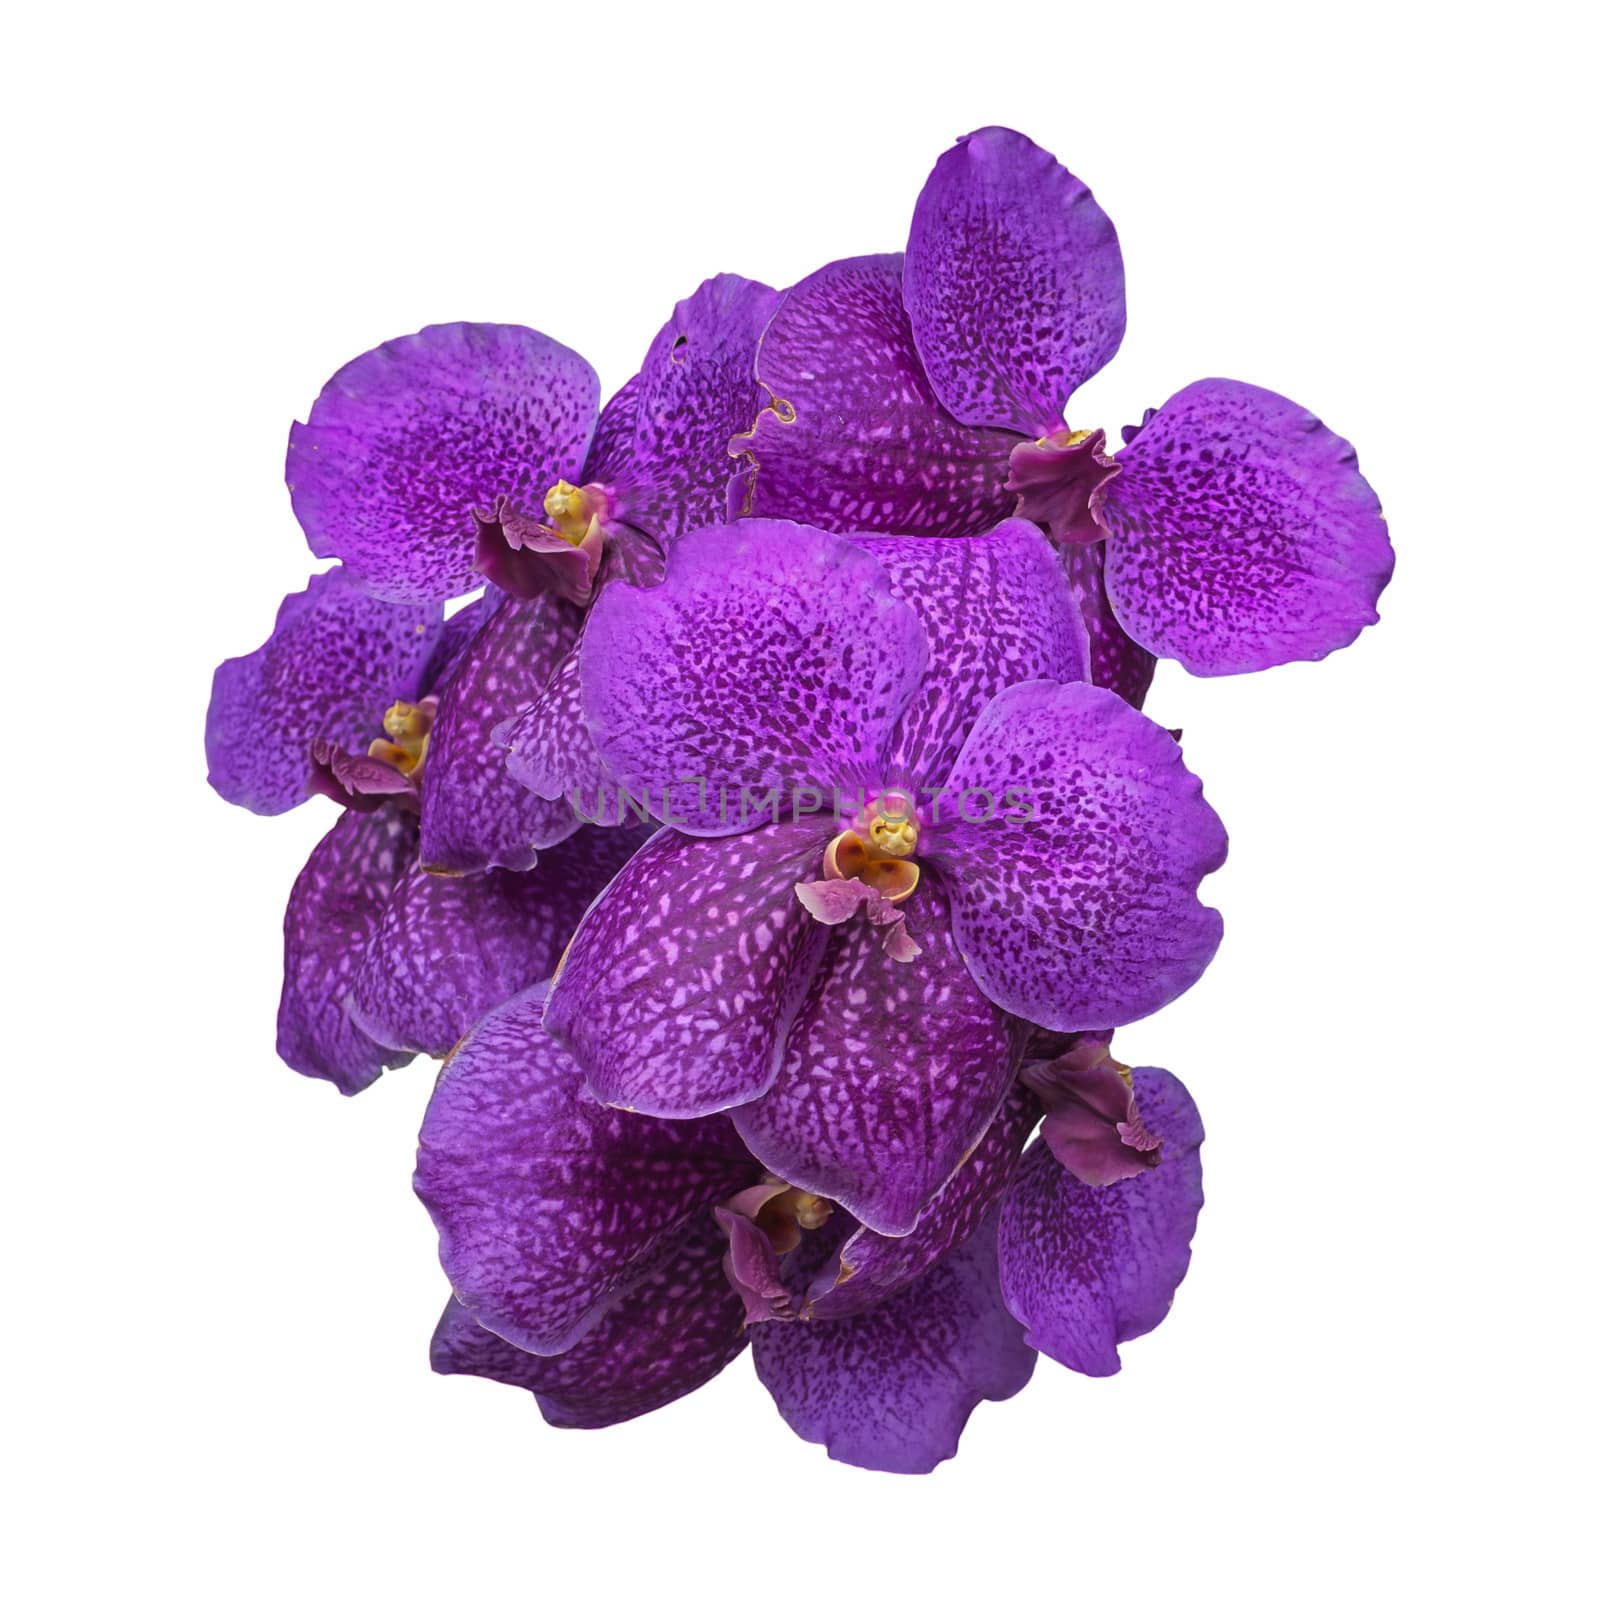 Purple Orchid, Vanda flower on white background by FrameAngel